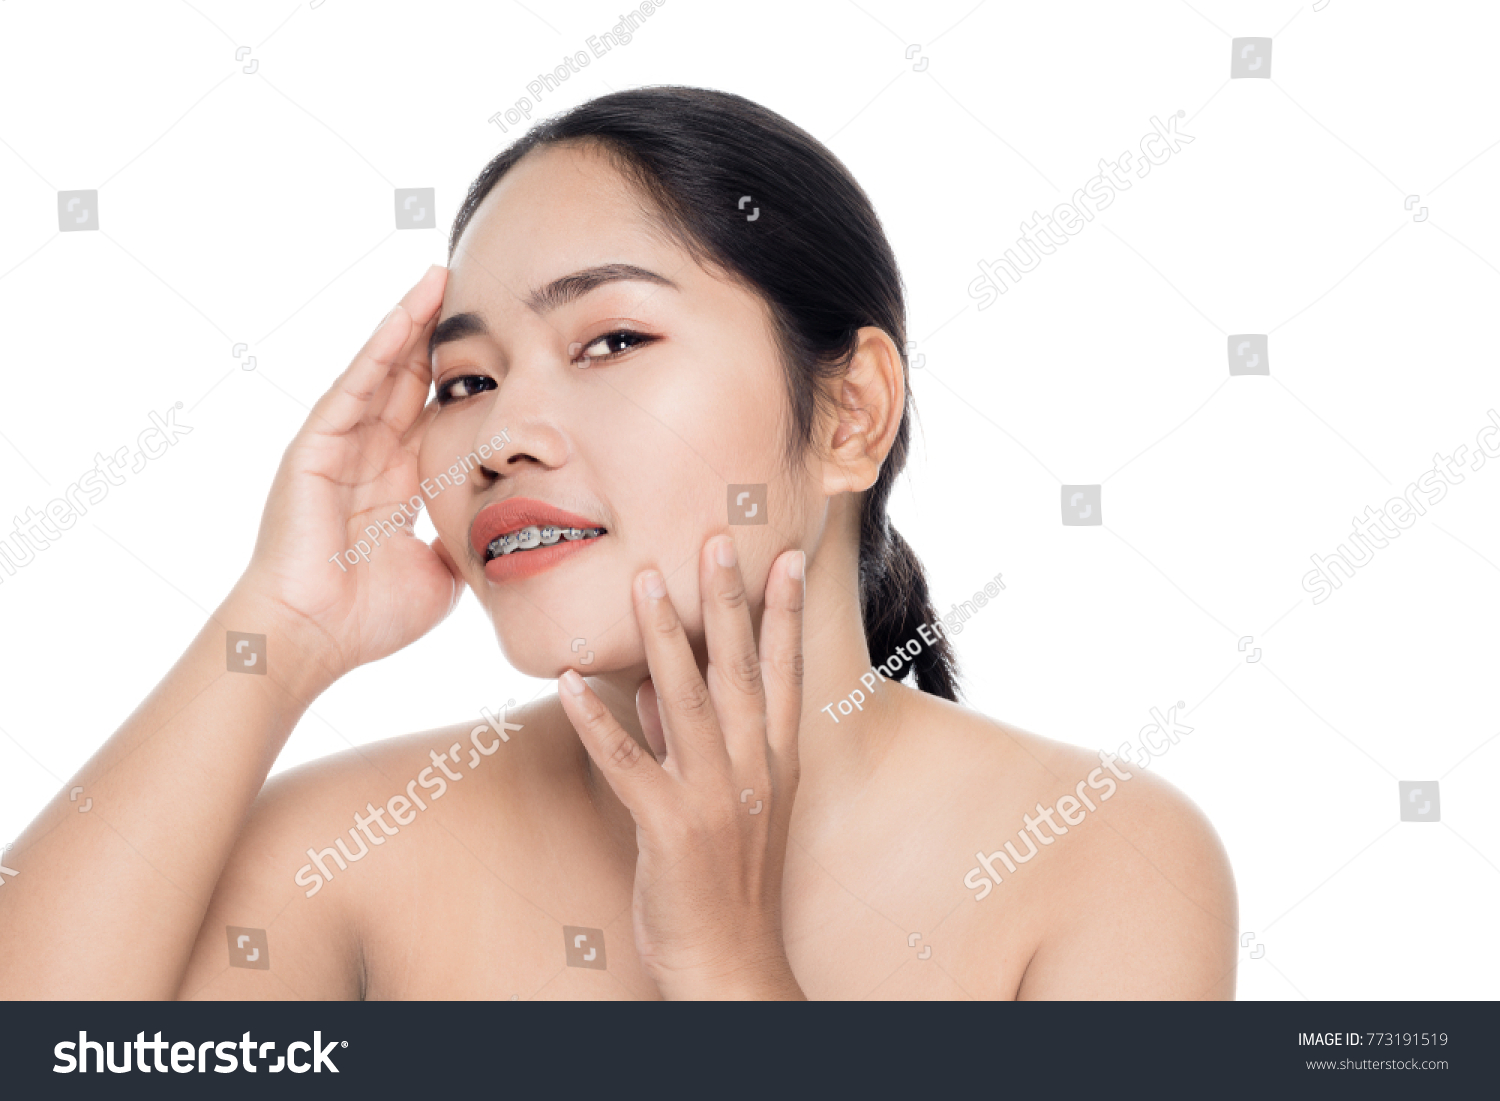 Beautiful woman face close up portrait studio on white background #773191519